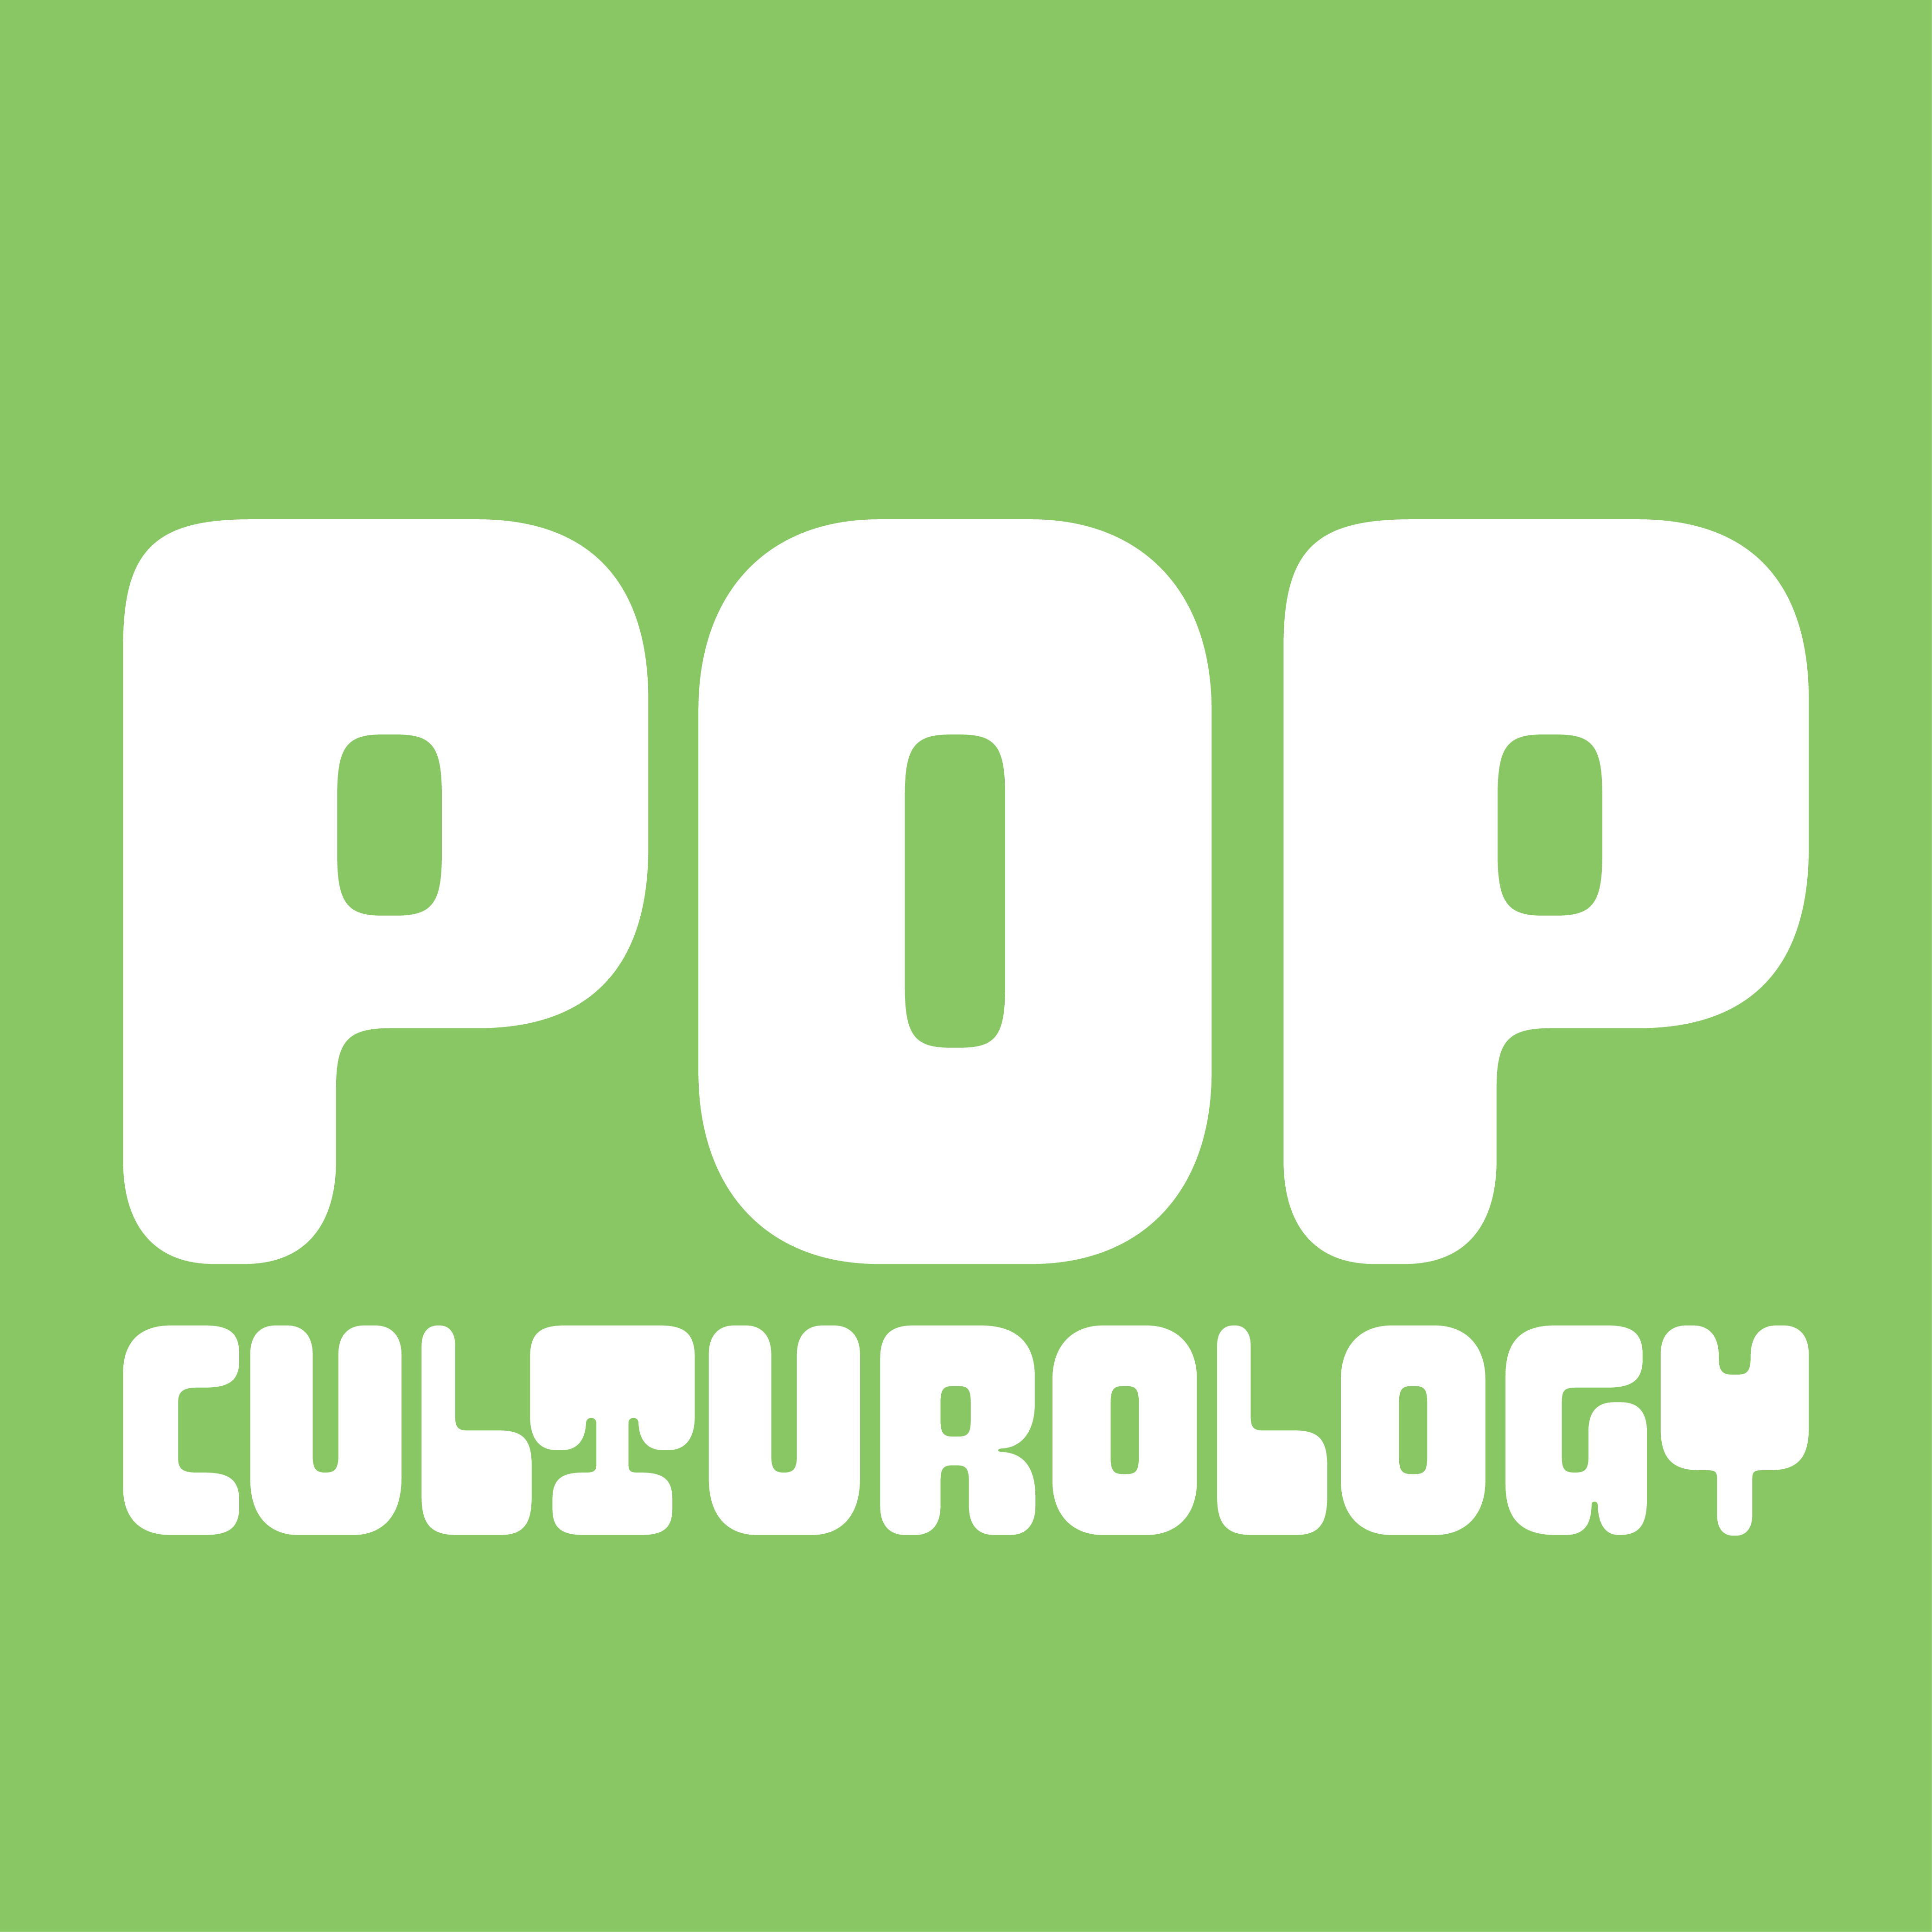 Popculturology